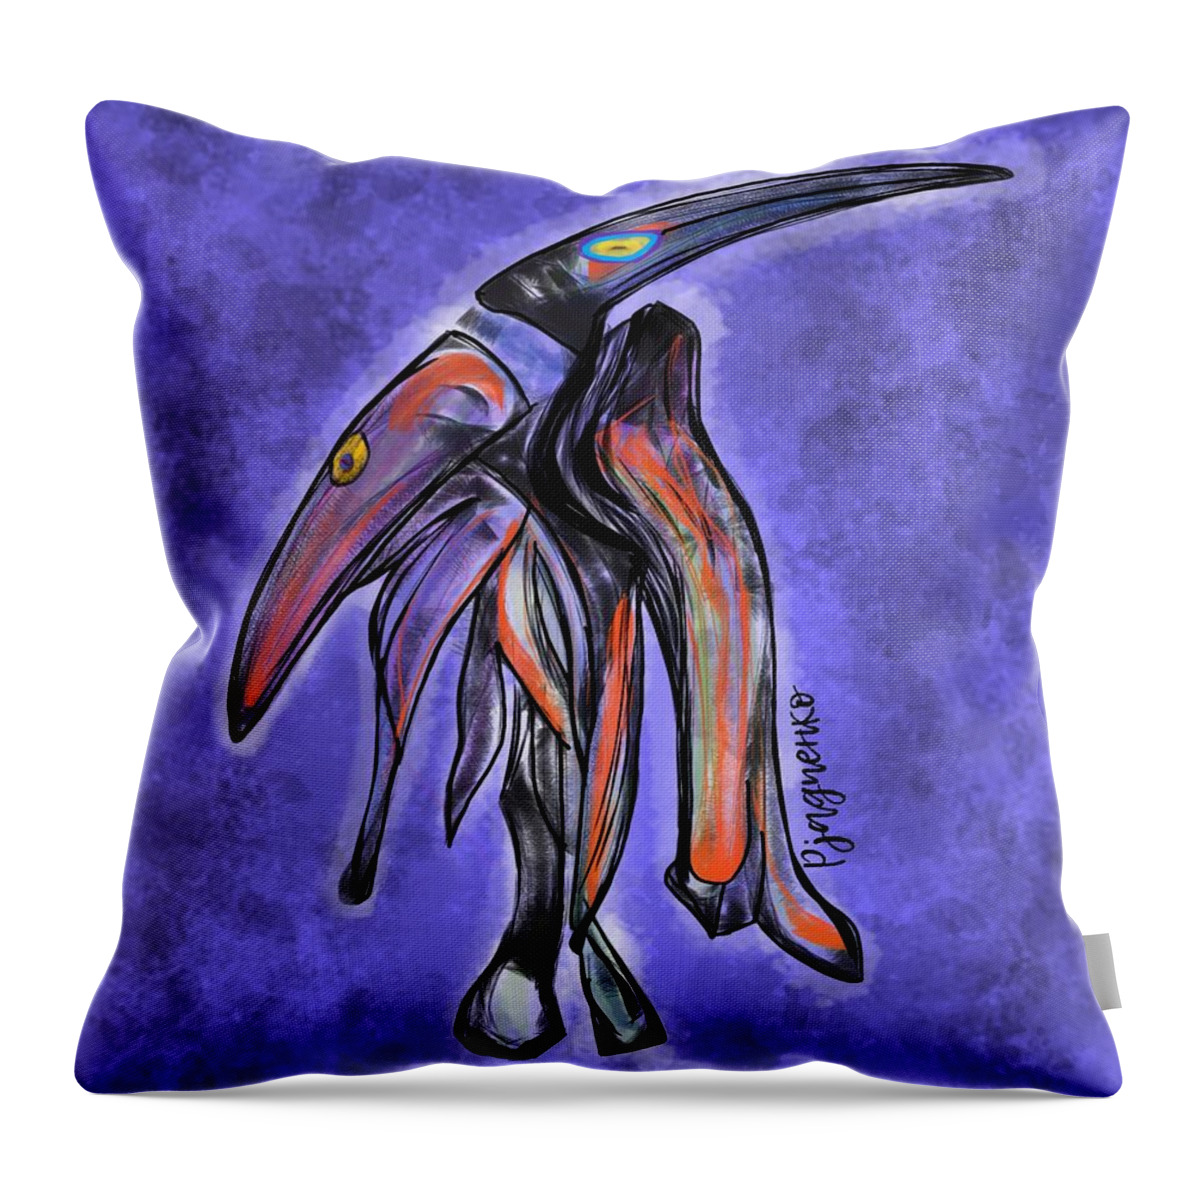 Black Throw Pillow featuring the digital art Raven by Ljev Rjadcenko